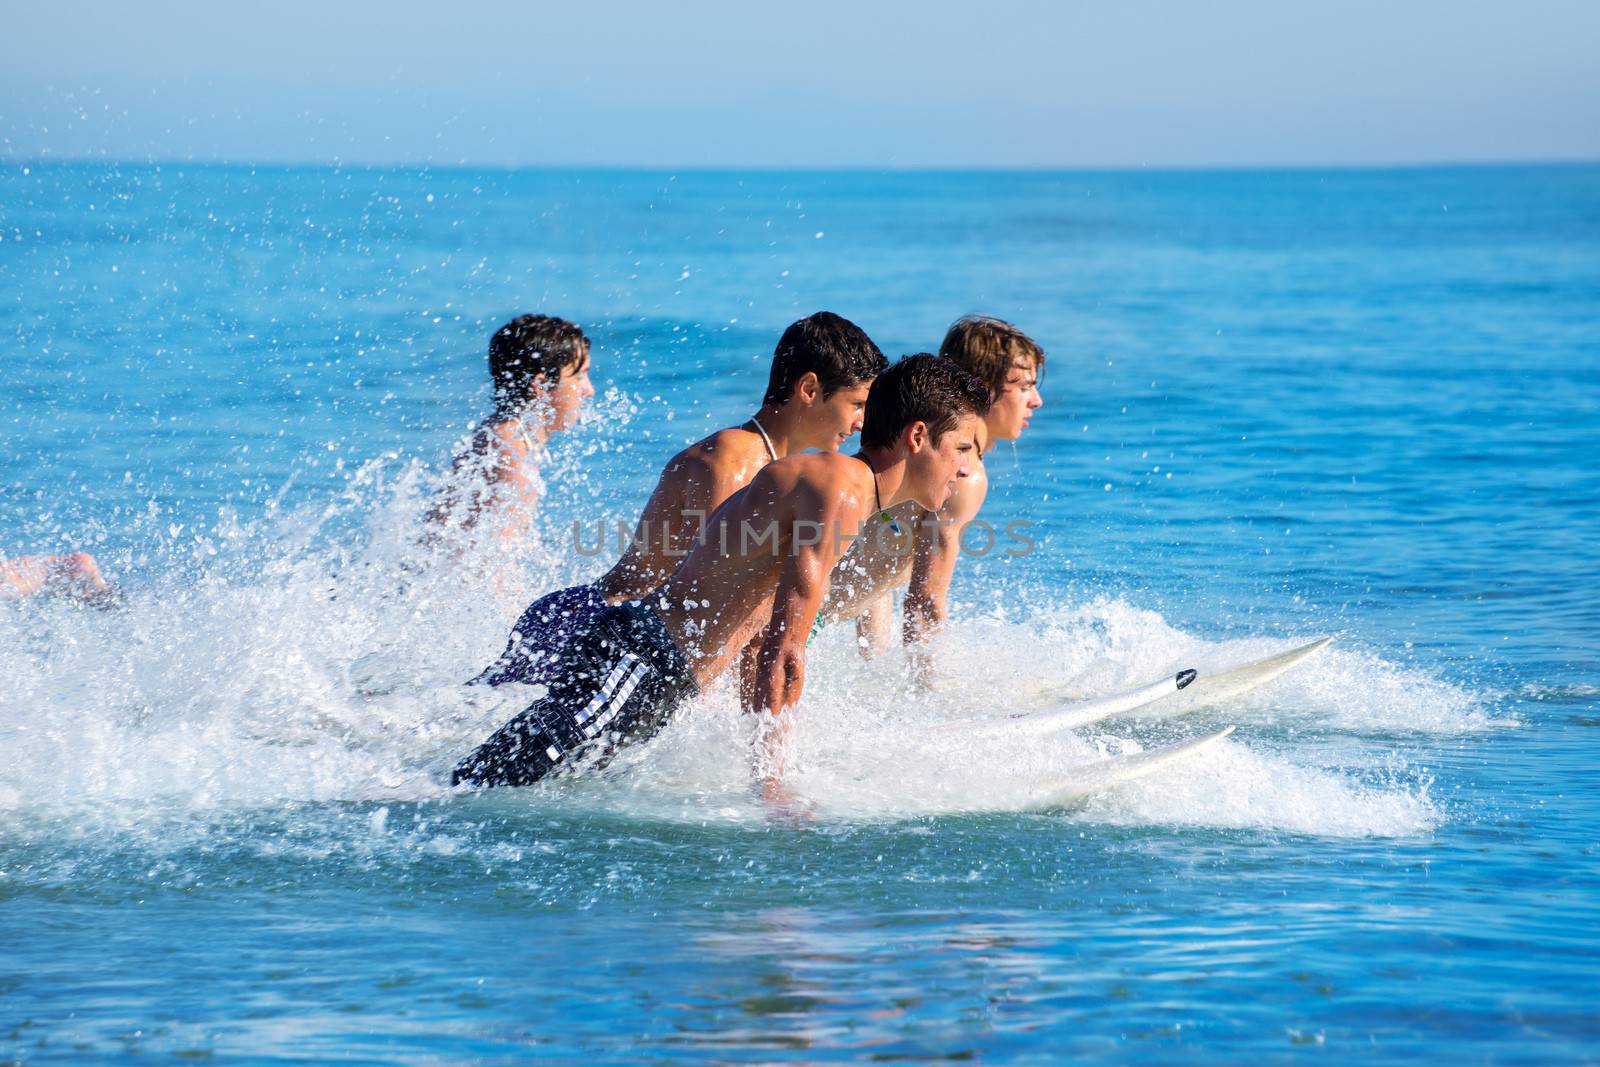 Boys surfers surfing running jumping on surfboards by lunamarina